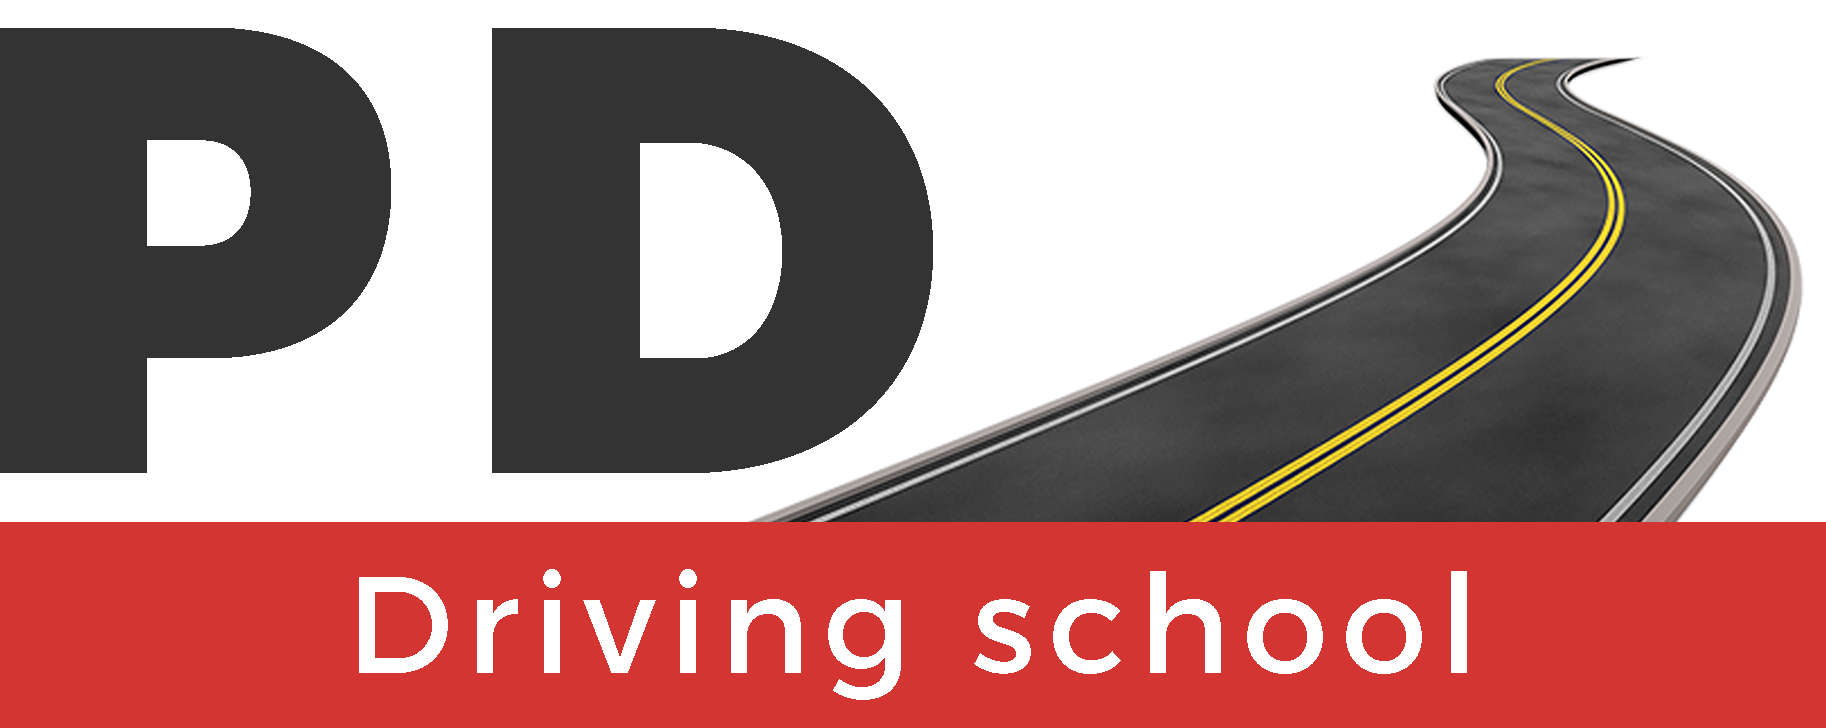 PD Driving School Auto